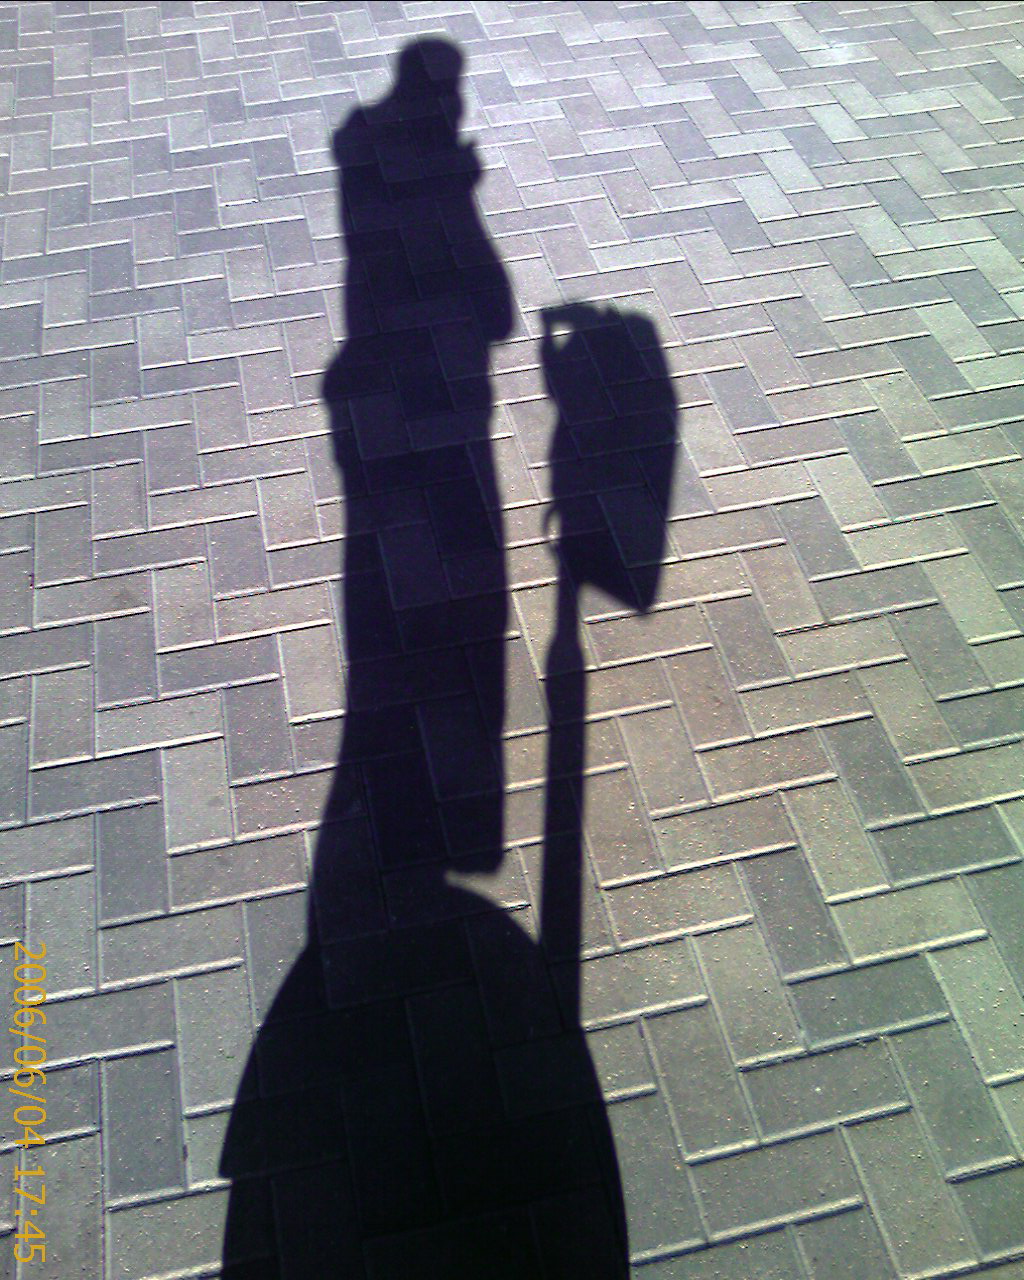 Segway casts a shadow